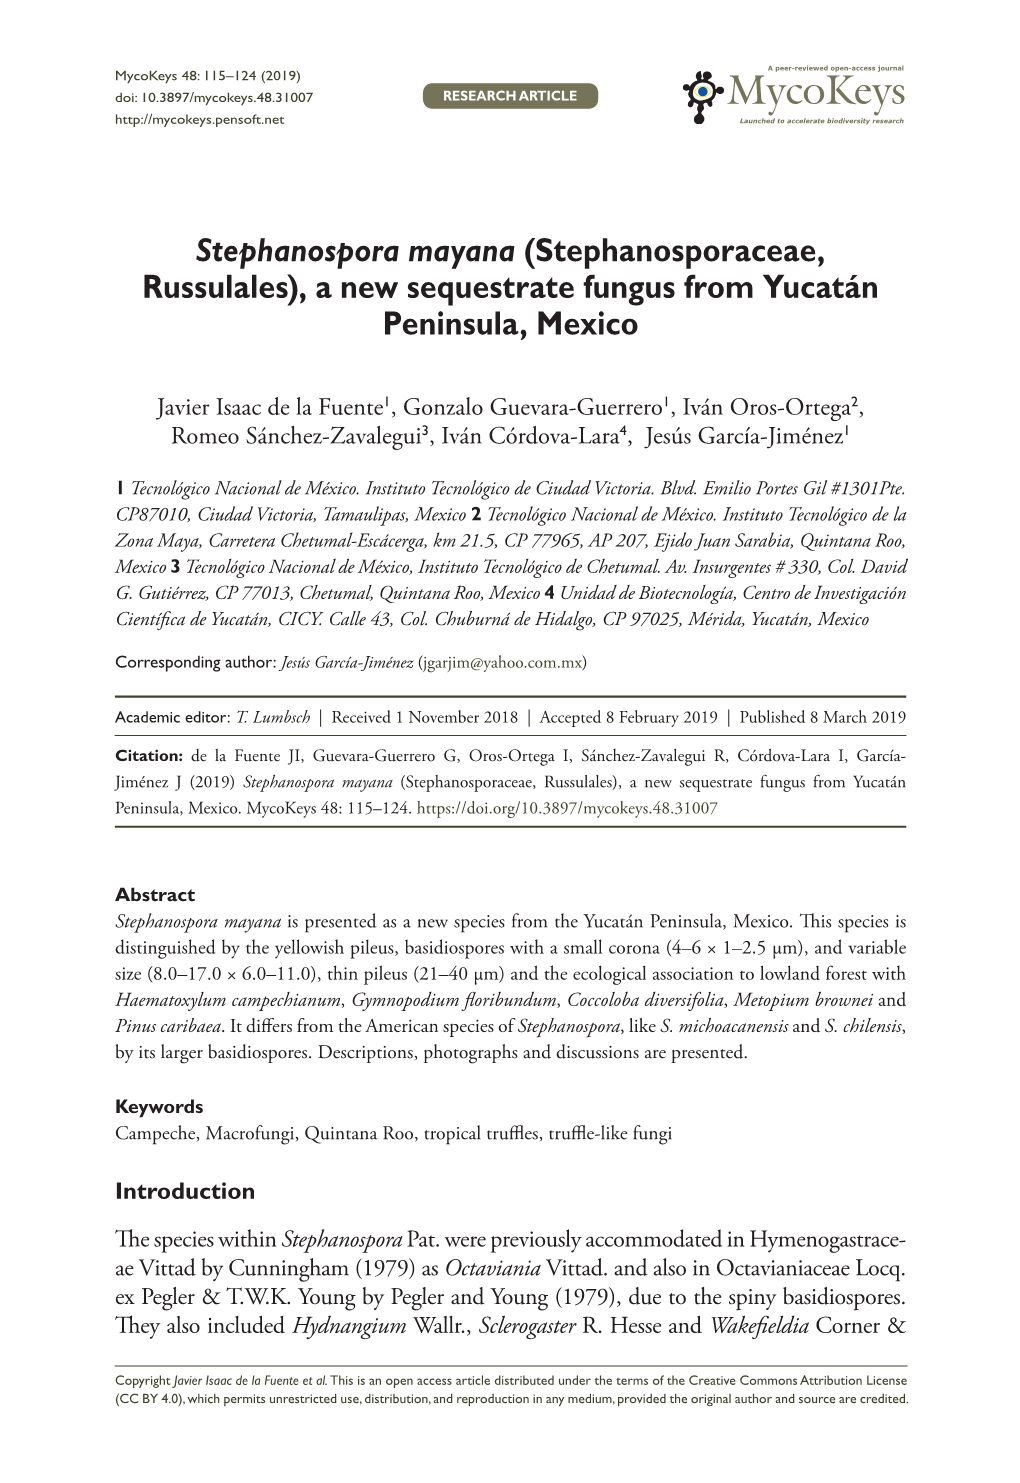 Stephanospora Mayana (Stephanosporaceae, Russulales), a New Sequestrate Fungus from Yucatán Peninsula, Mexico